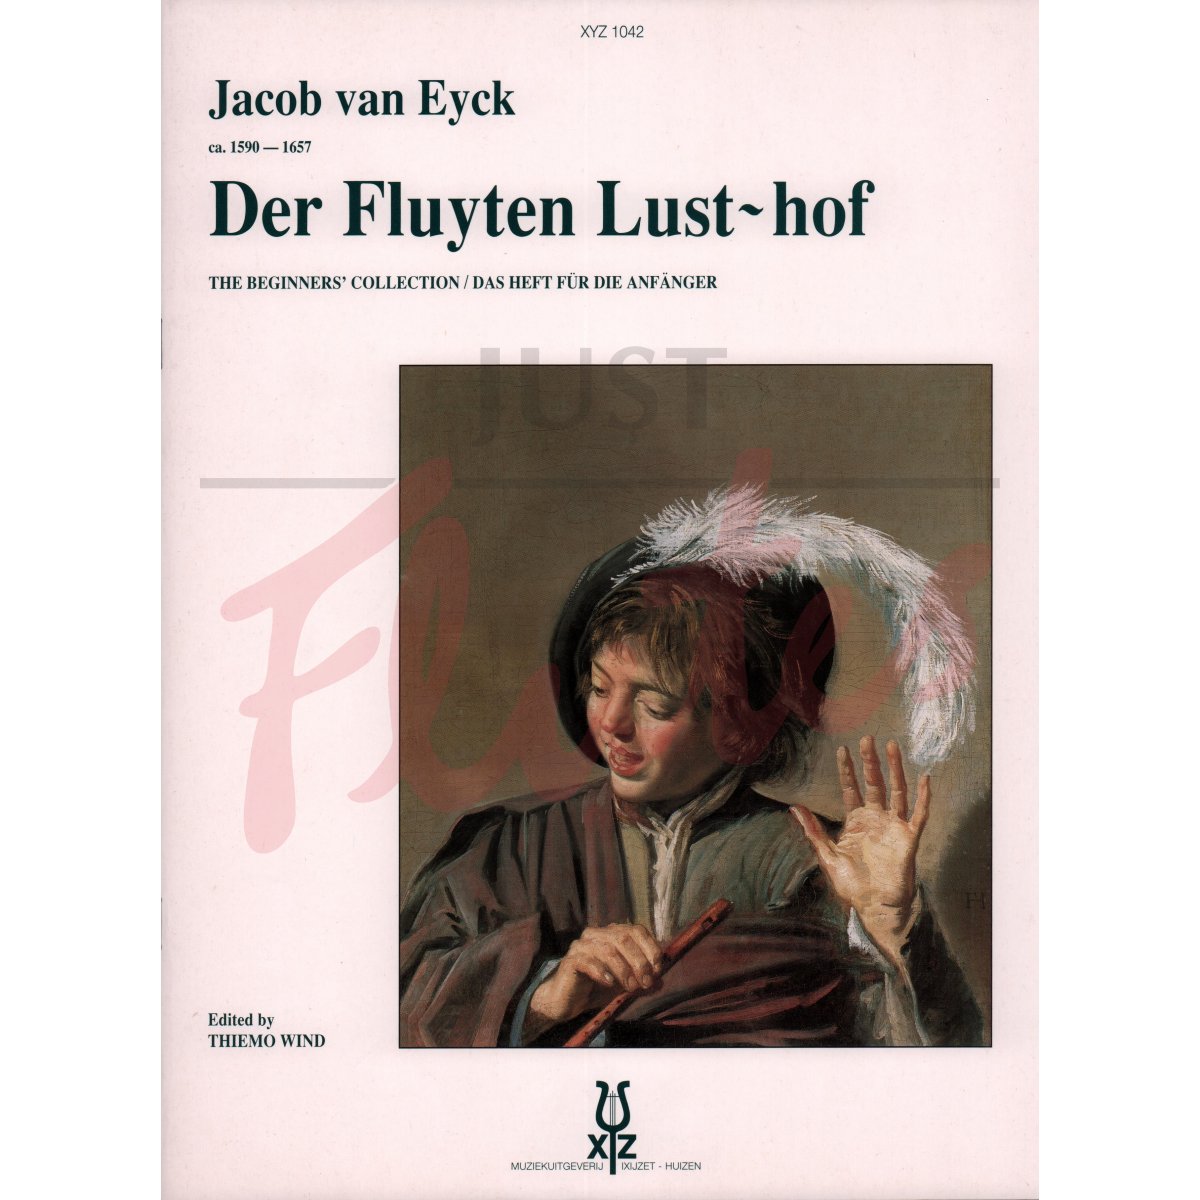 Der Fluyten Lust-hof (The Beginner's Collection) for Descant Recorder